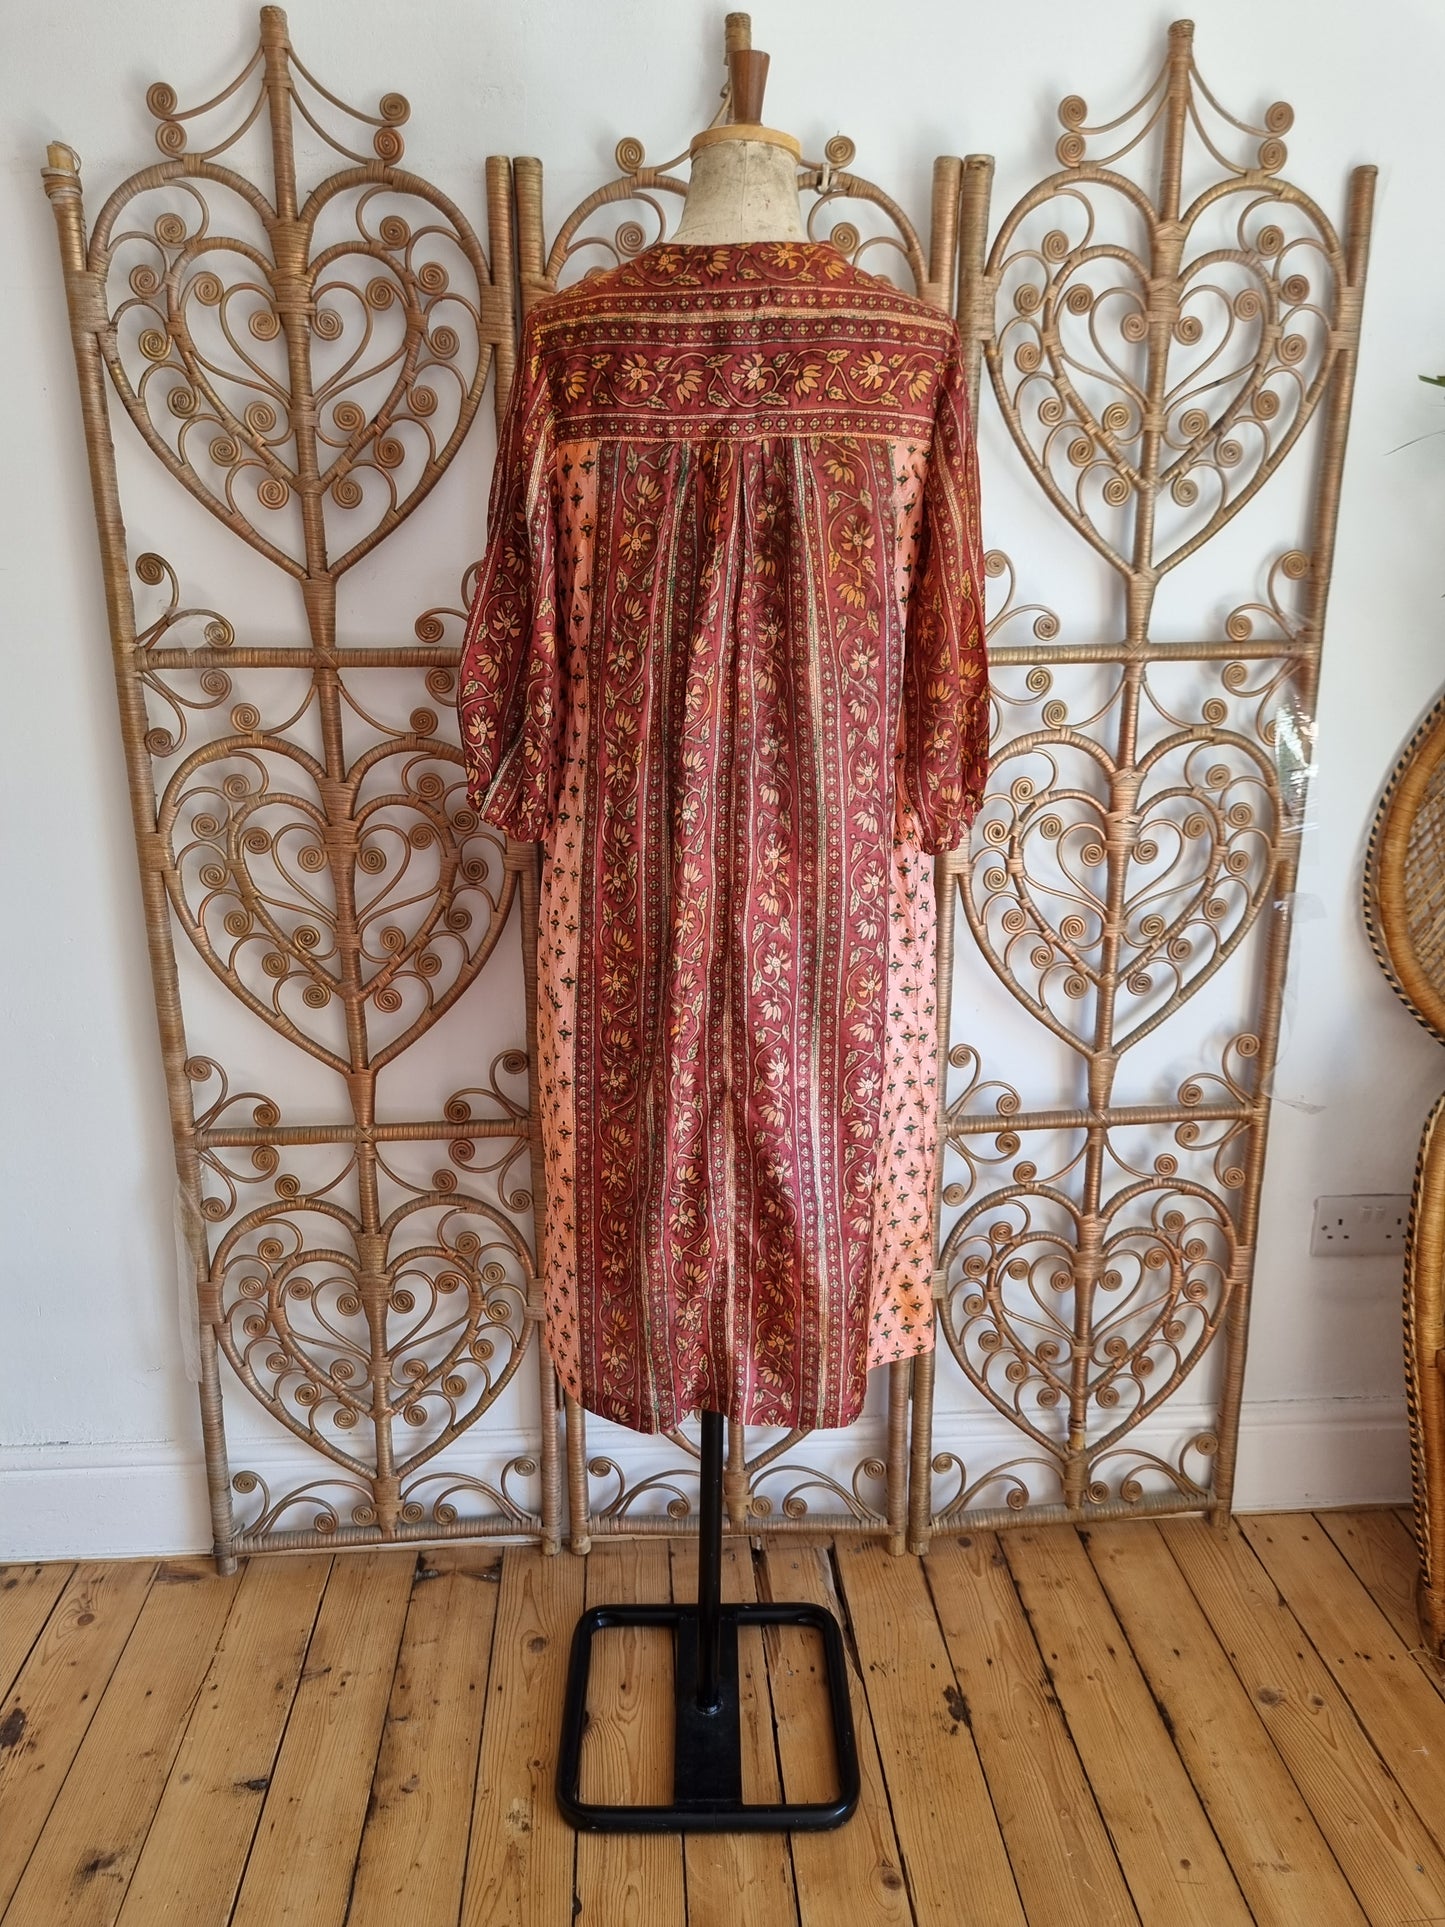 Vintage silk Indian dress